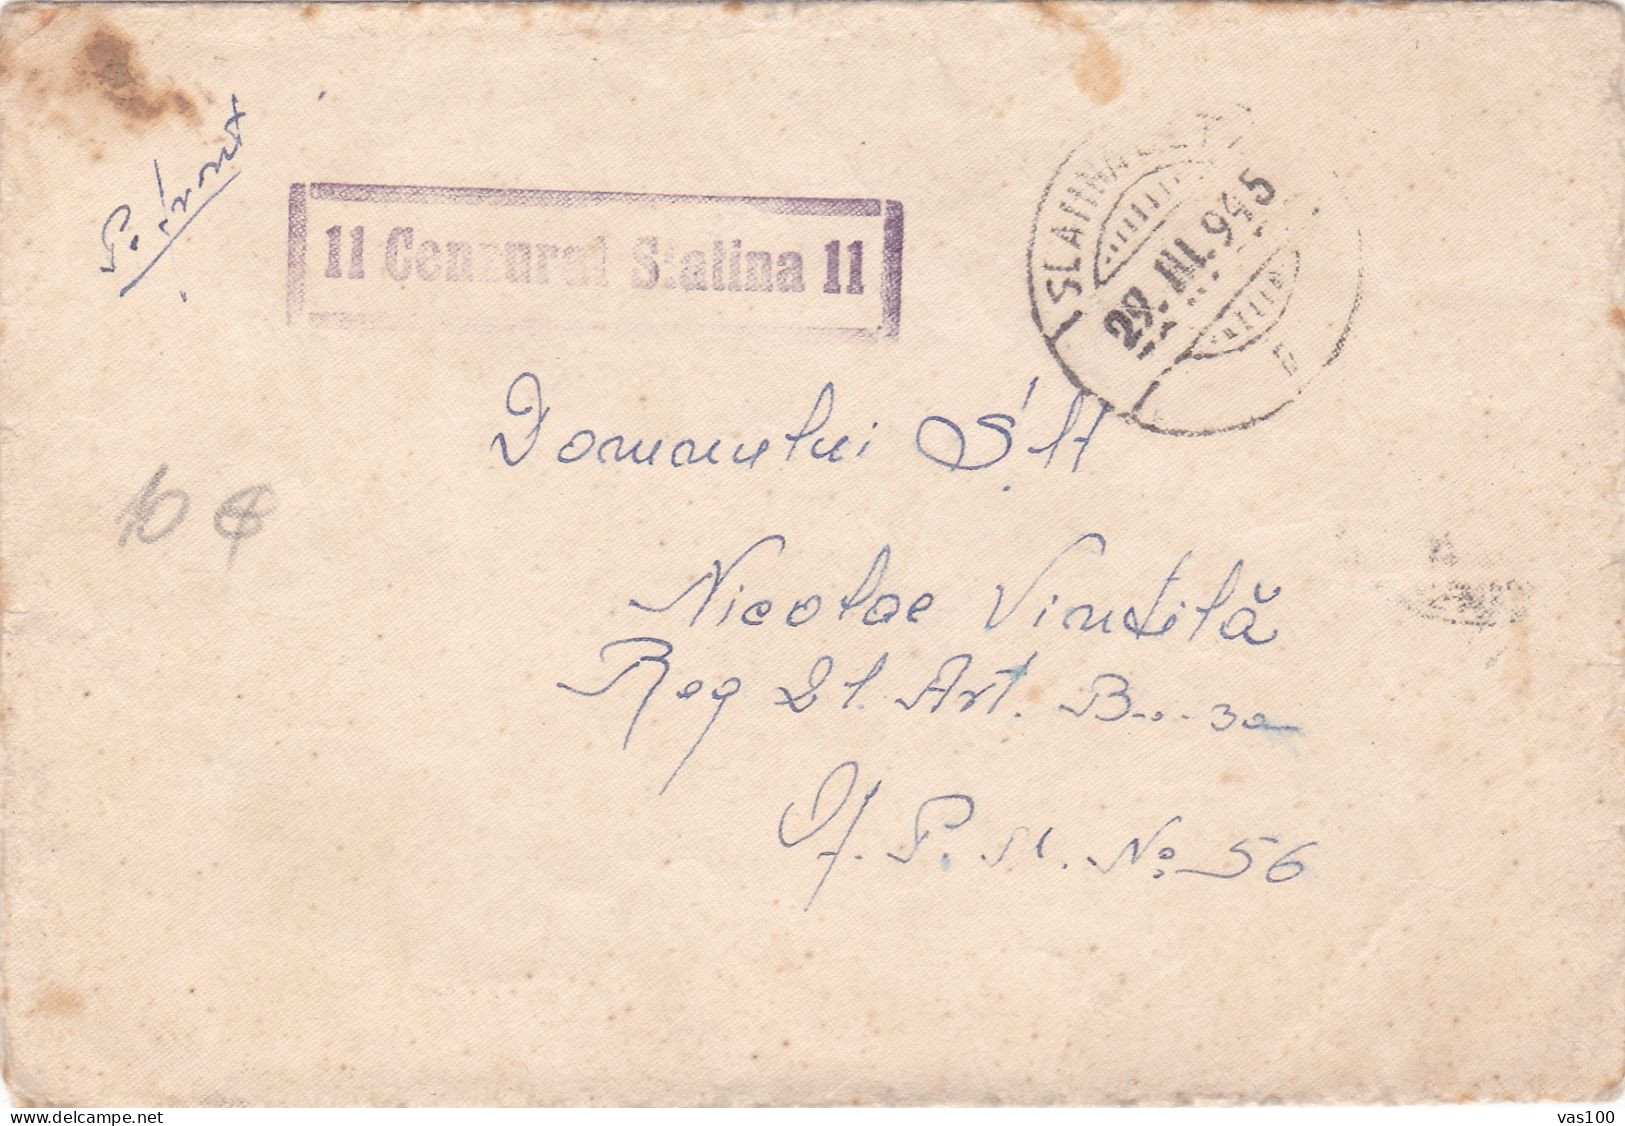 COVER WW2 CENSORED,CENSOR,SLATINA # 11, ROMANIA - World War 2 Letters